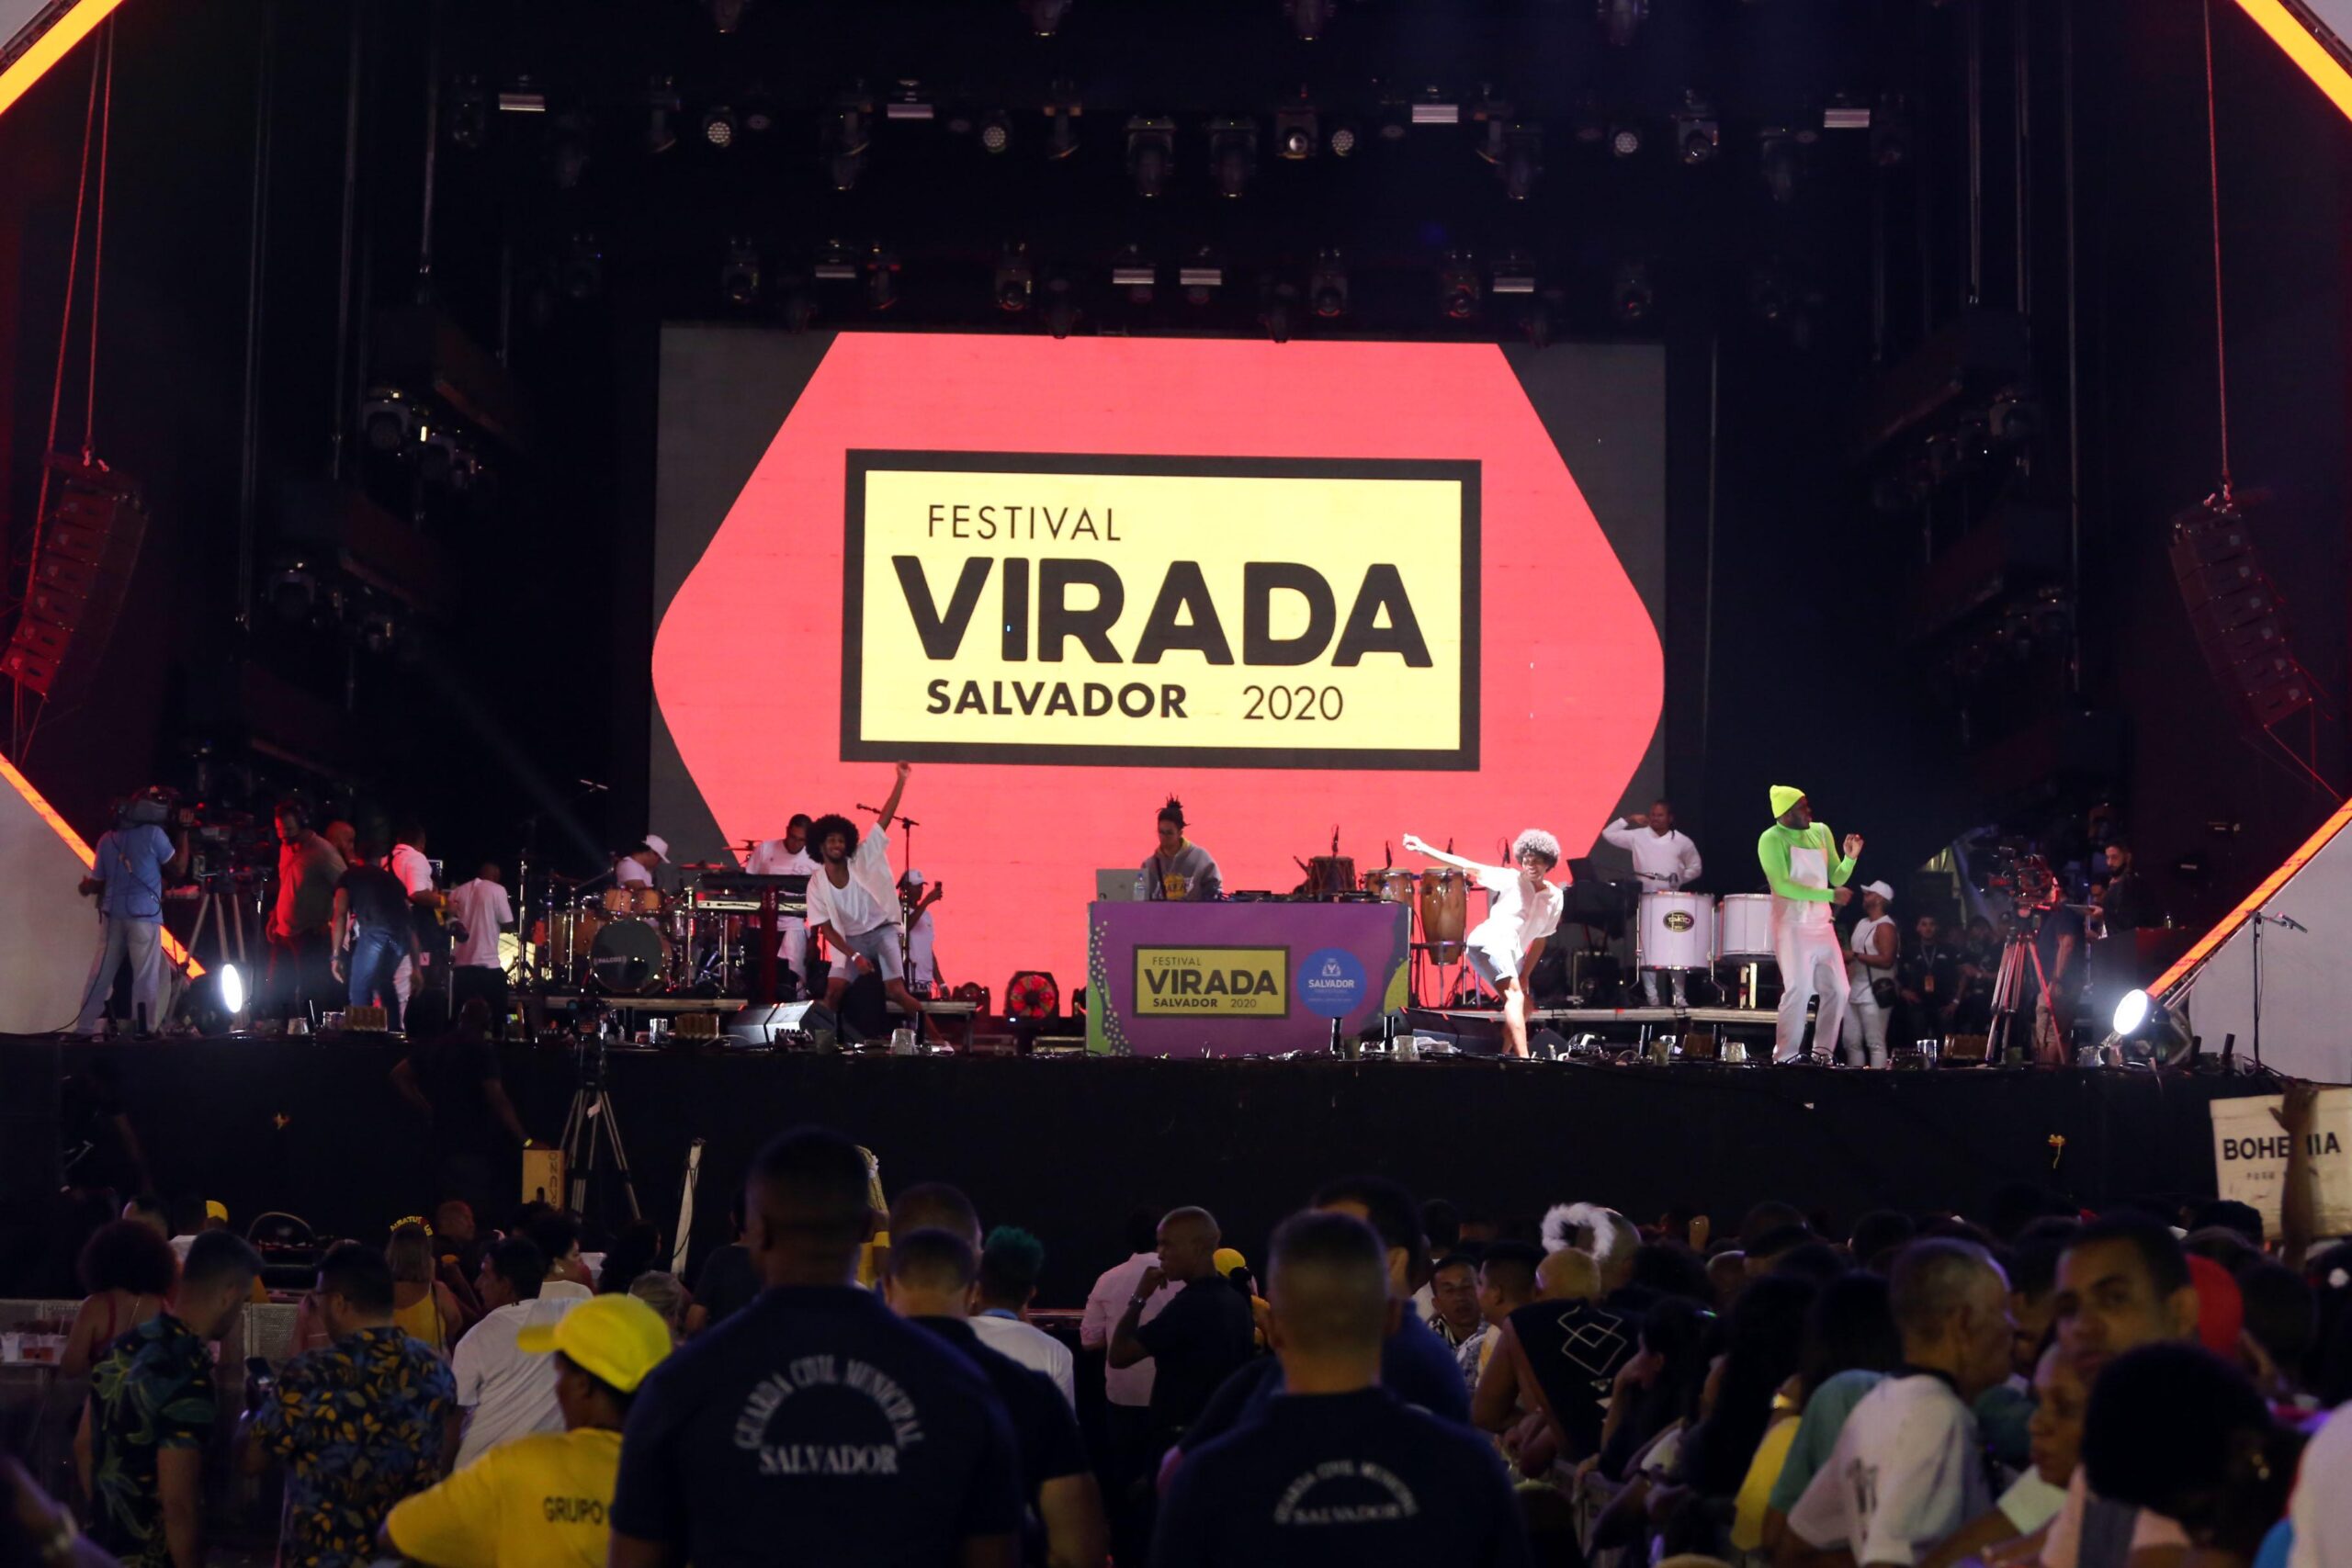 Canal da Prefeitura no YouTube transmitirá Festival Virada Salvador ao vivo